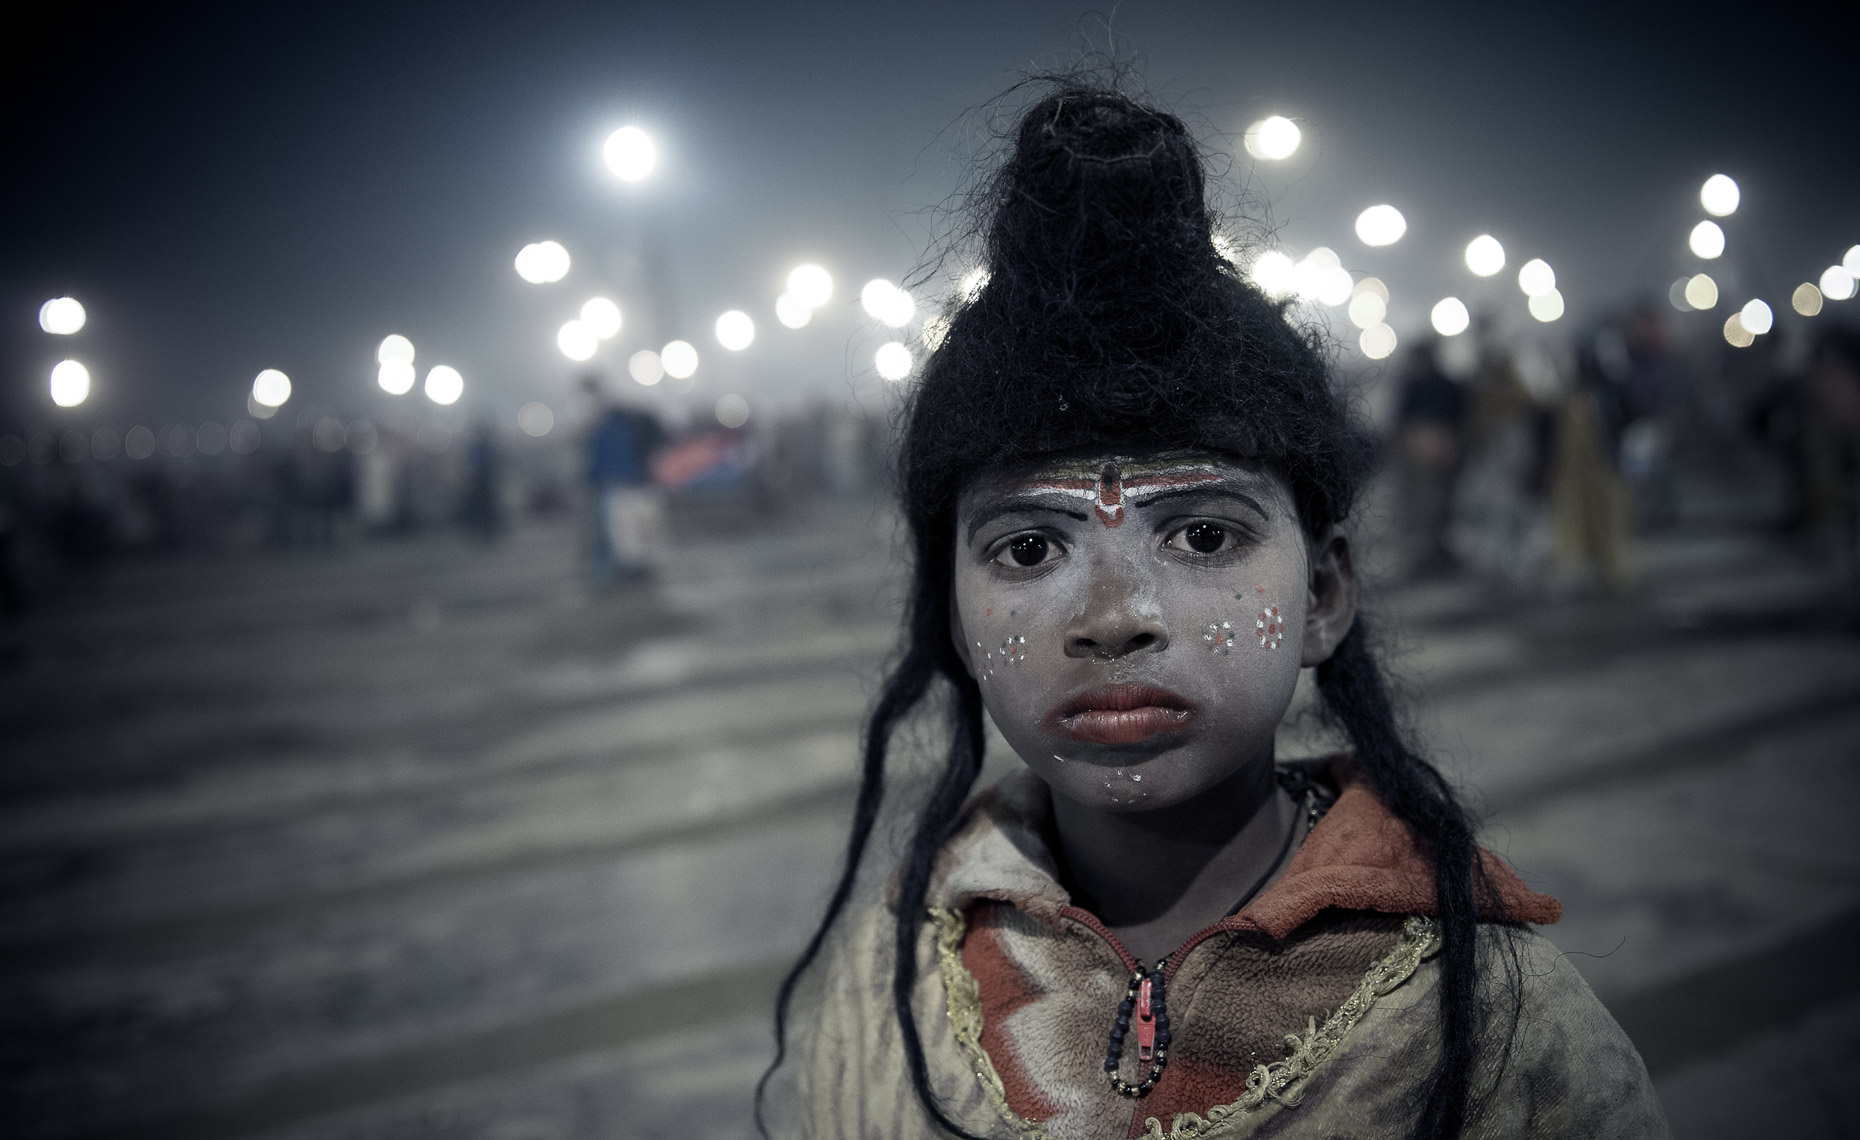 kumbh-mela-india-girl-with-face-paint